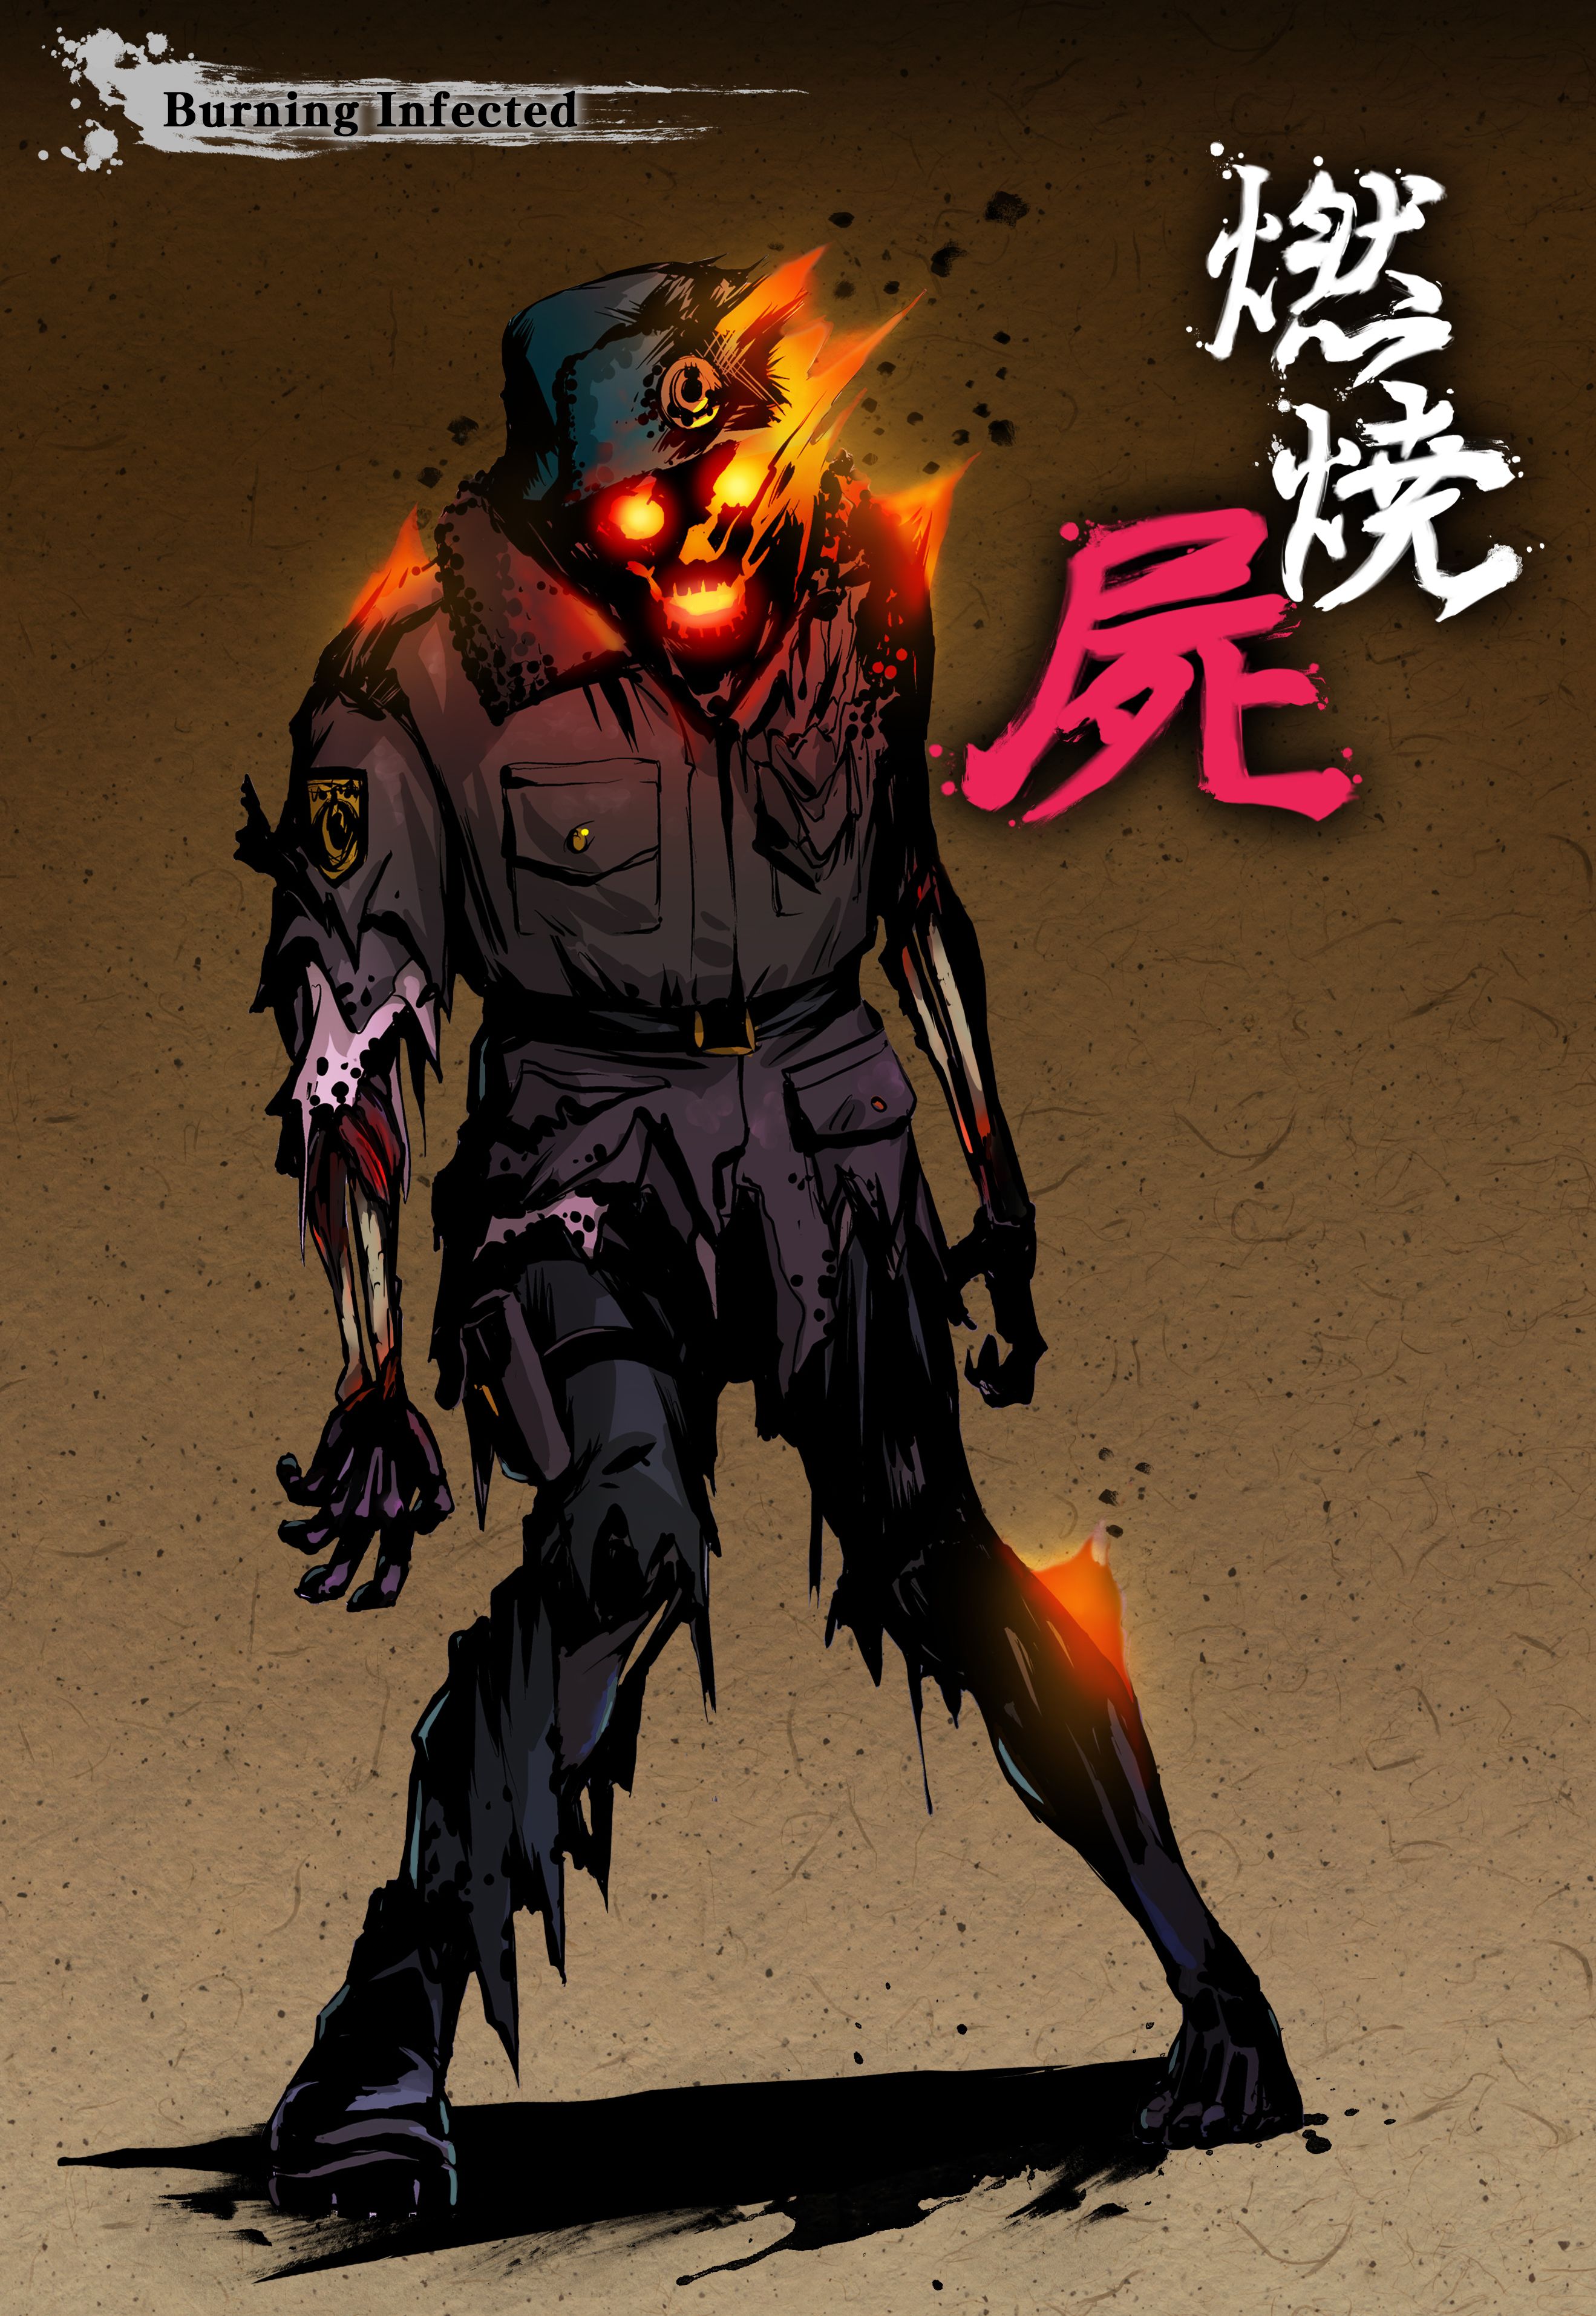 Yaiba Ninja Gaiden Z - ZombieStill_Burning Infected_130819